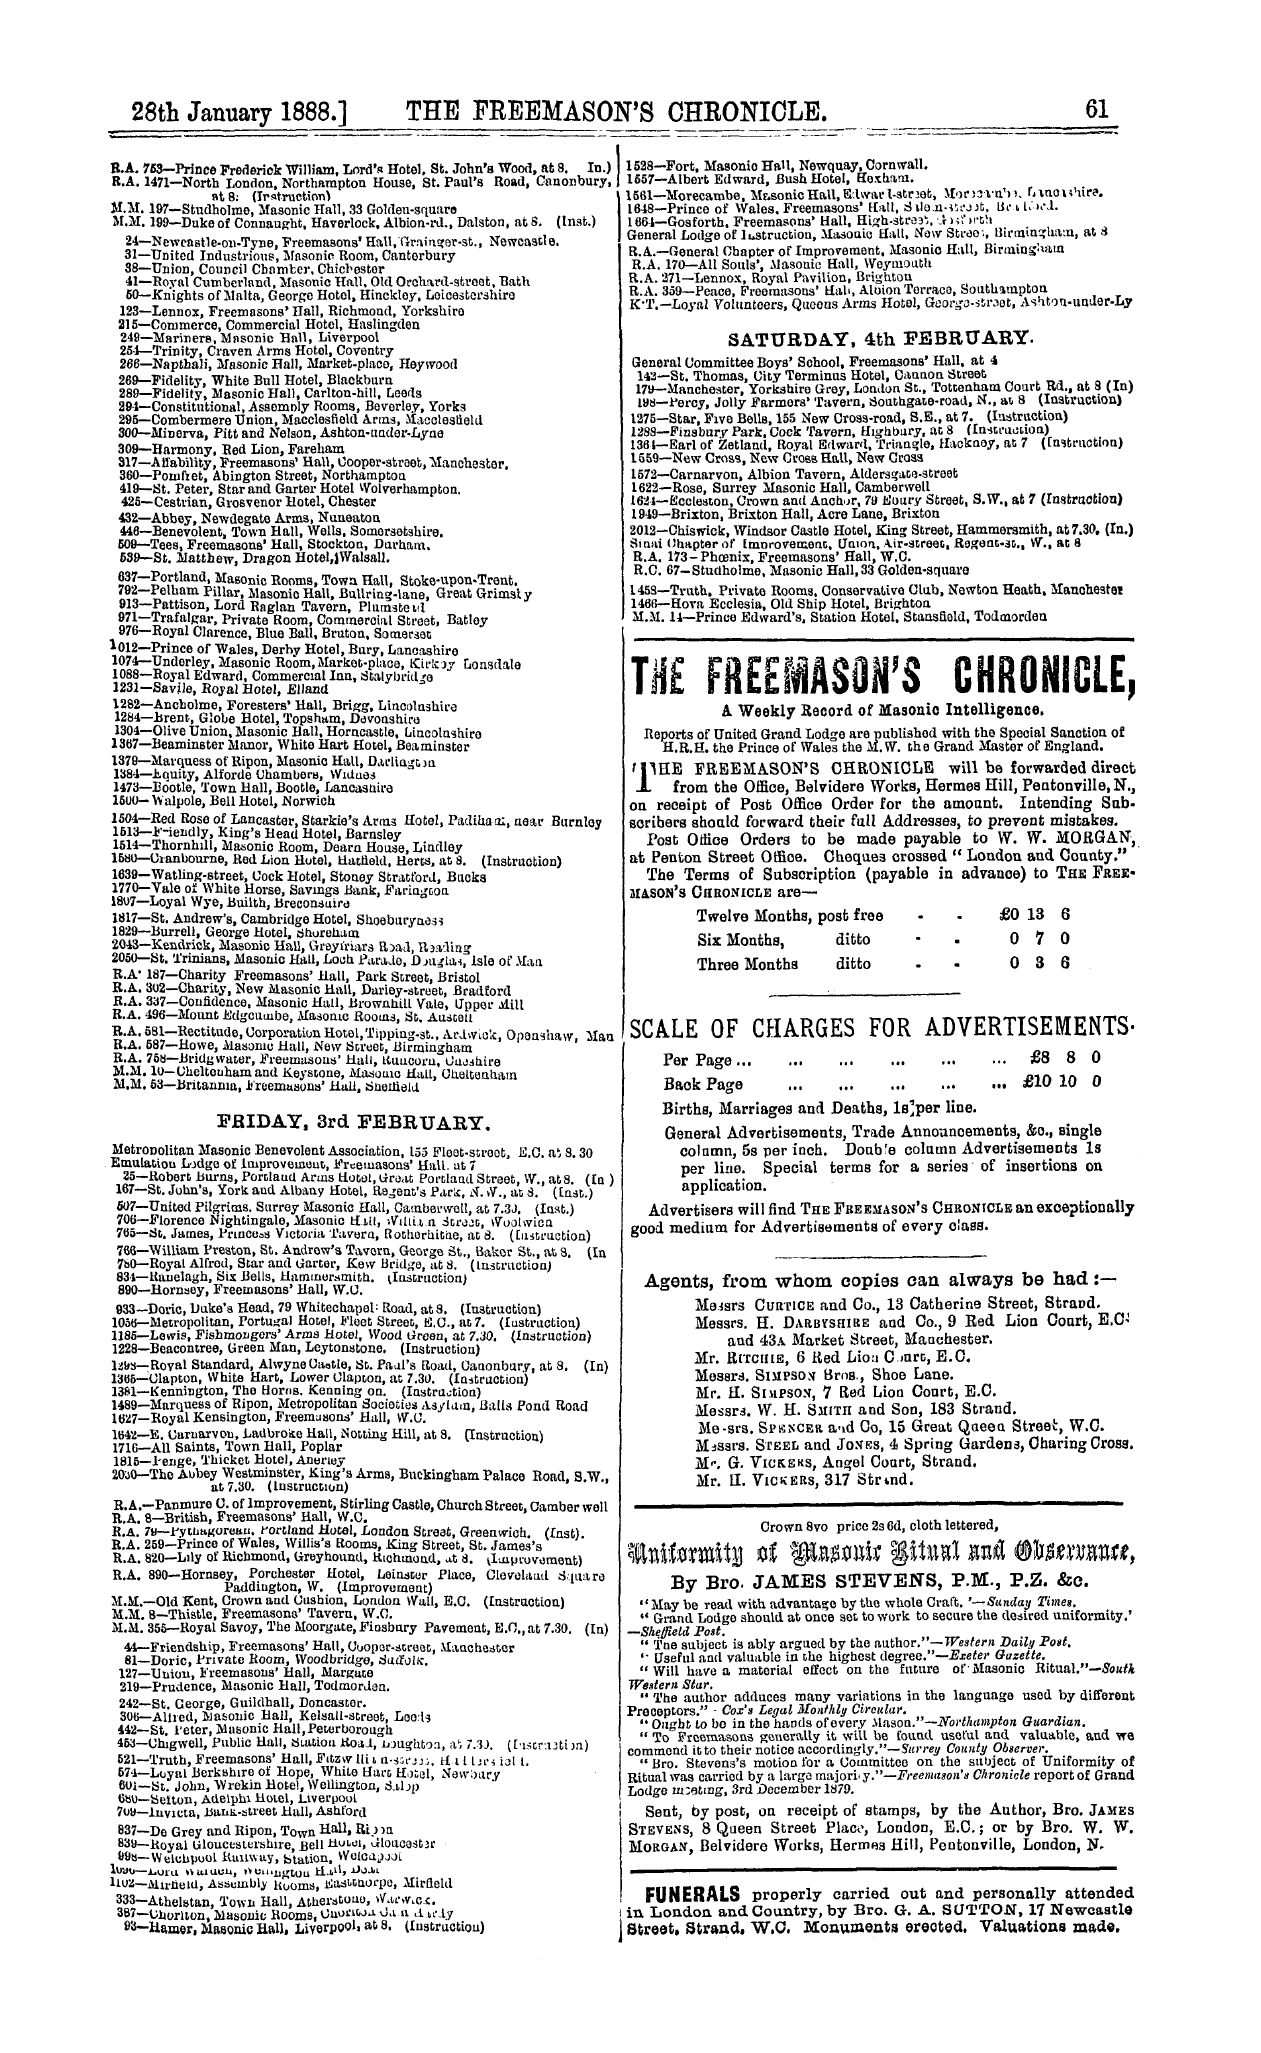 The Freemason's Chronicle: 1888-01-28: 13